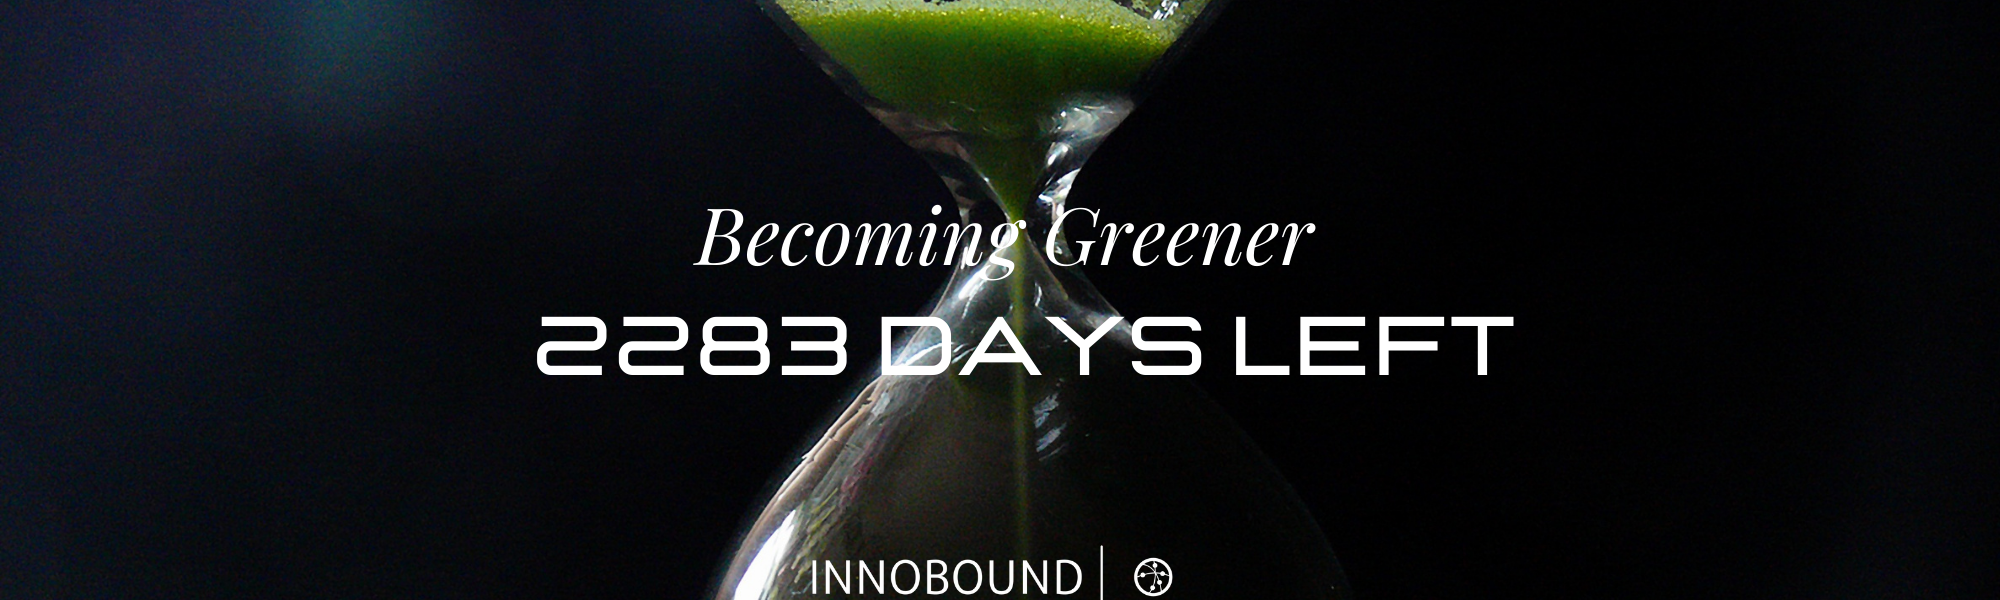 En este momento estás viendo Becoming Greener – 2283 Days Left